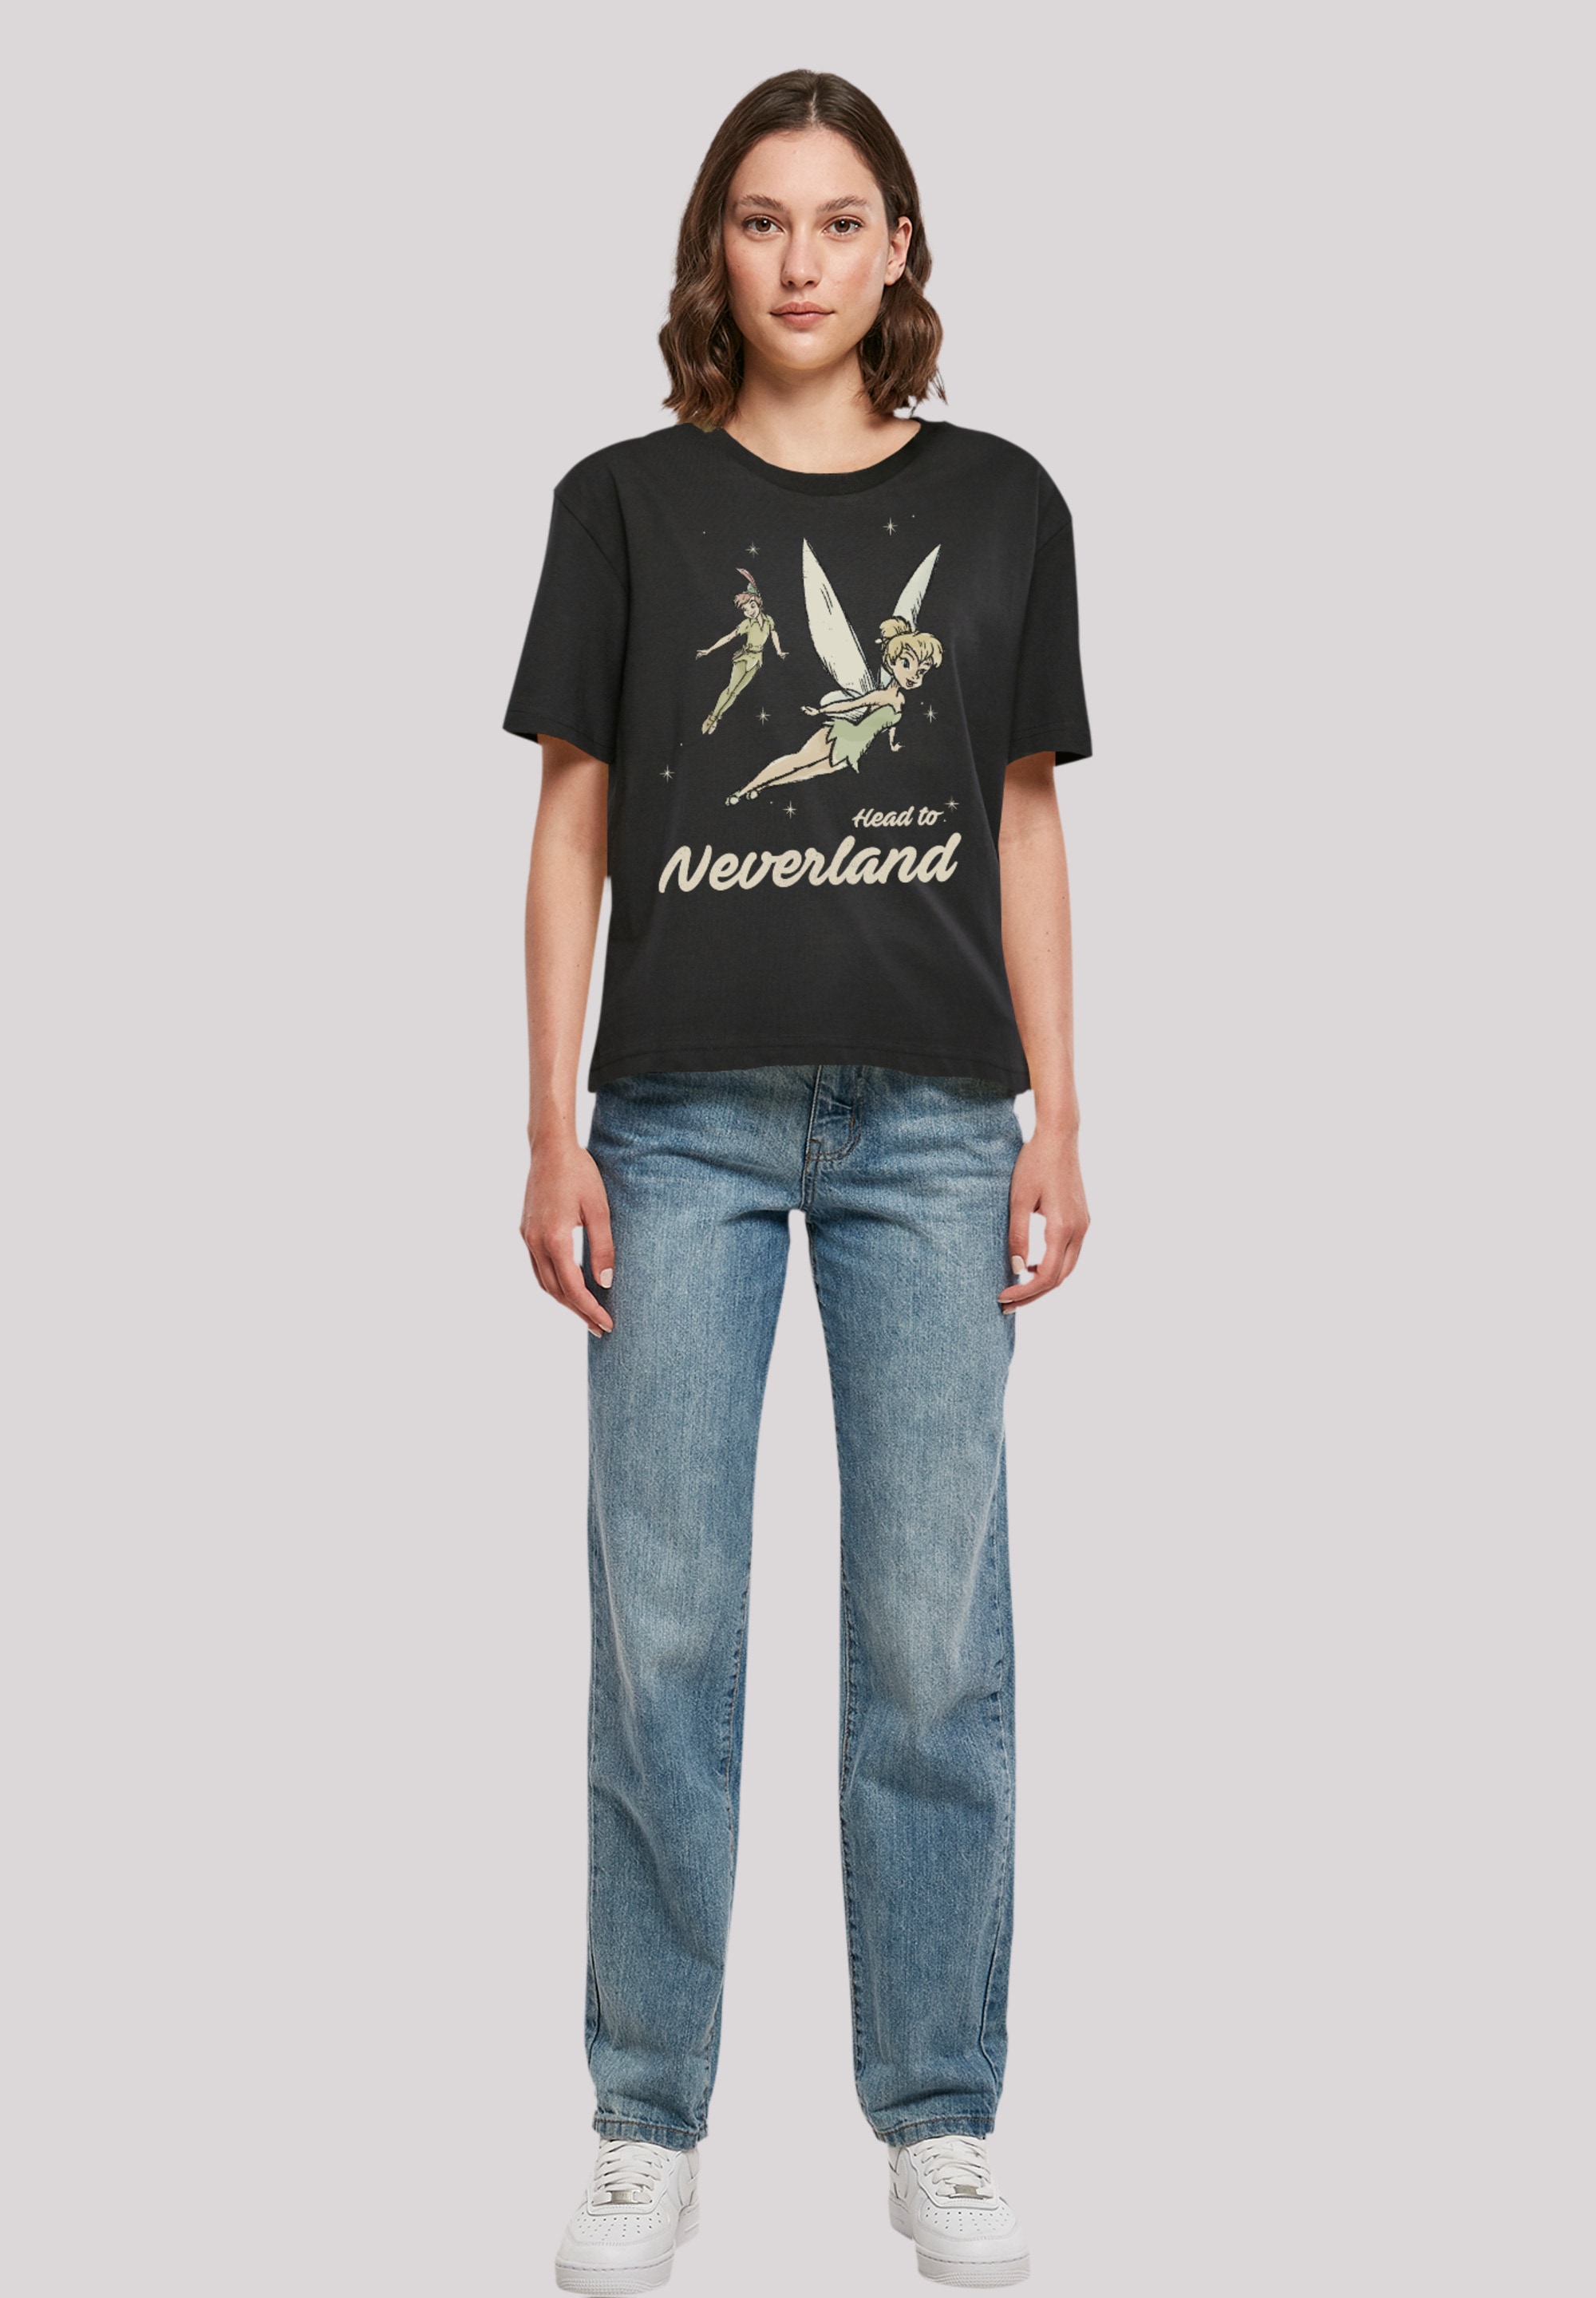 F4NT4STIC T-Shirt »Disney Peter Pan Head To Neverland«, Premium Qualität |  I'm walking